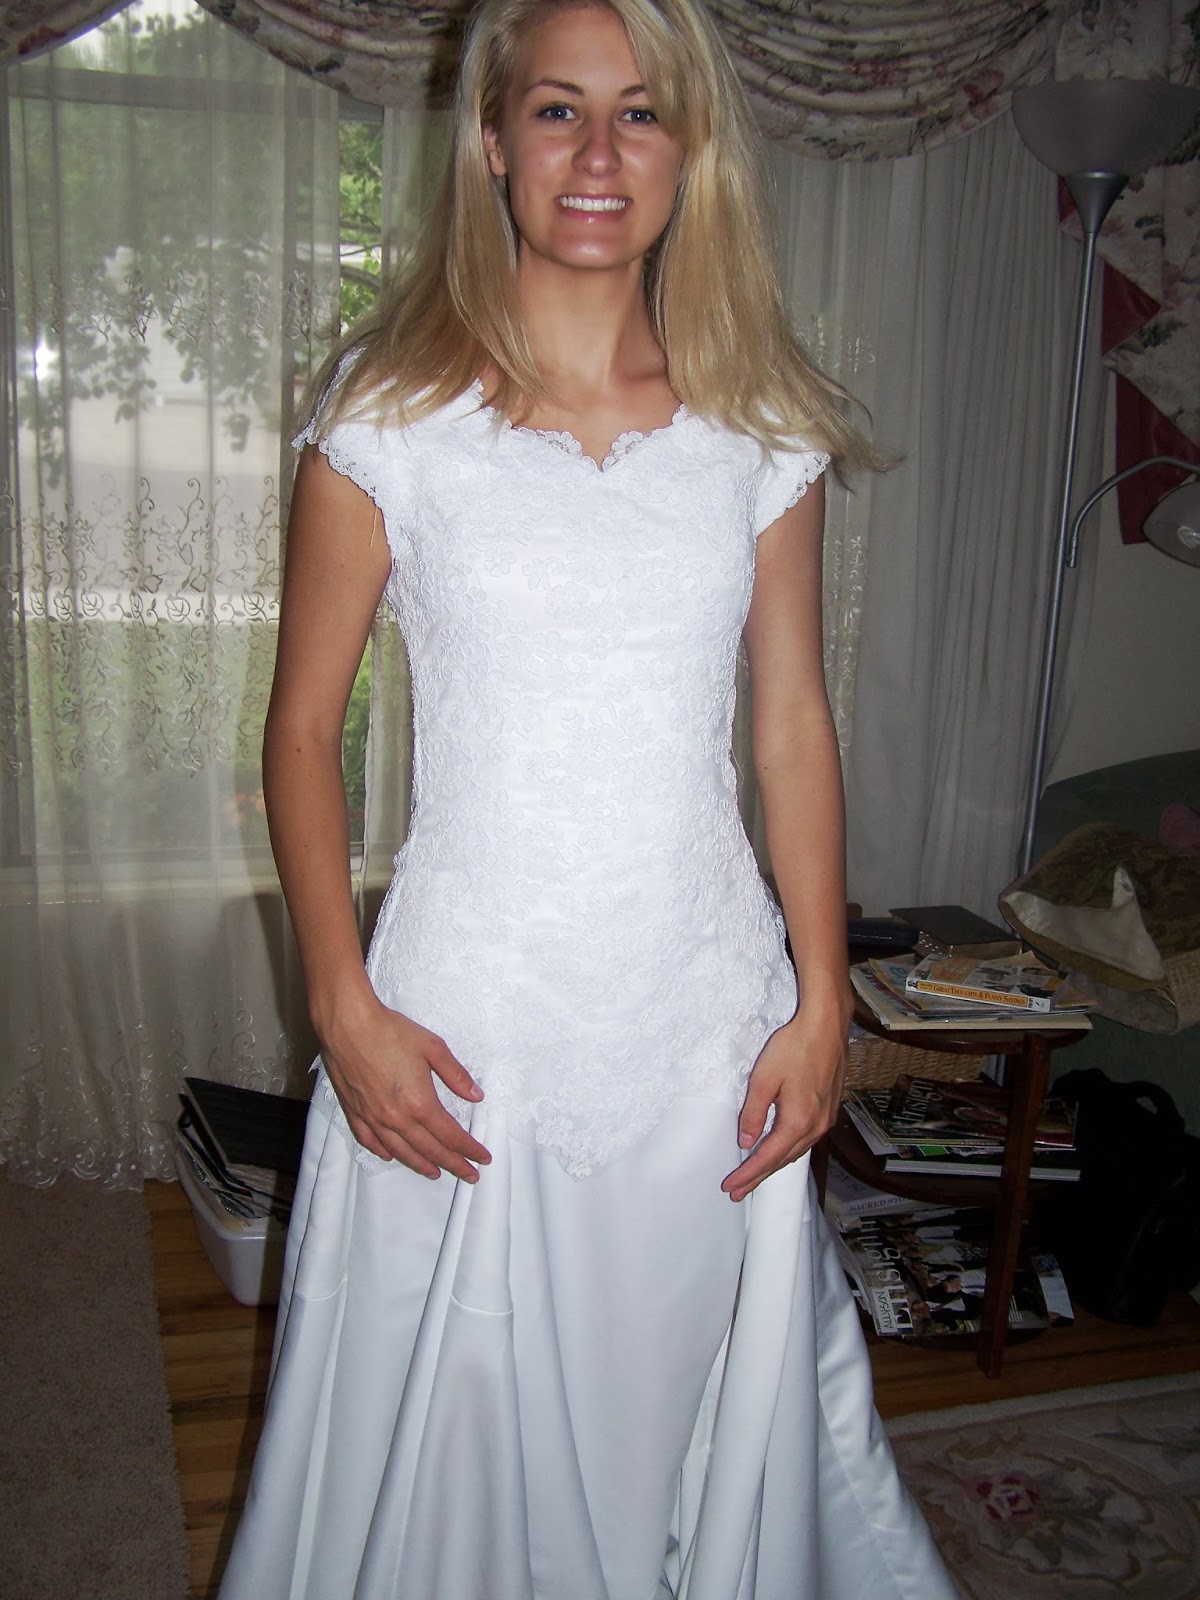 sewcreatelive: Making My Daughter's Wedding Dress